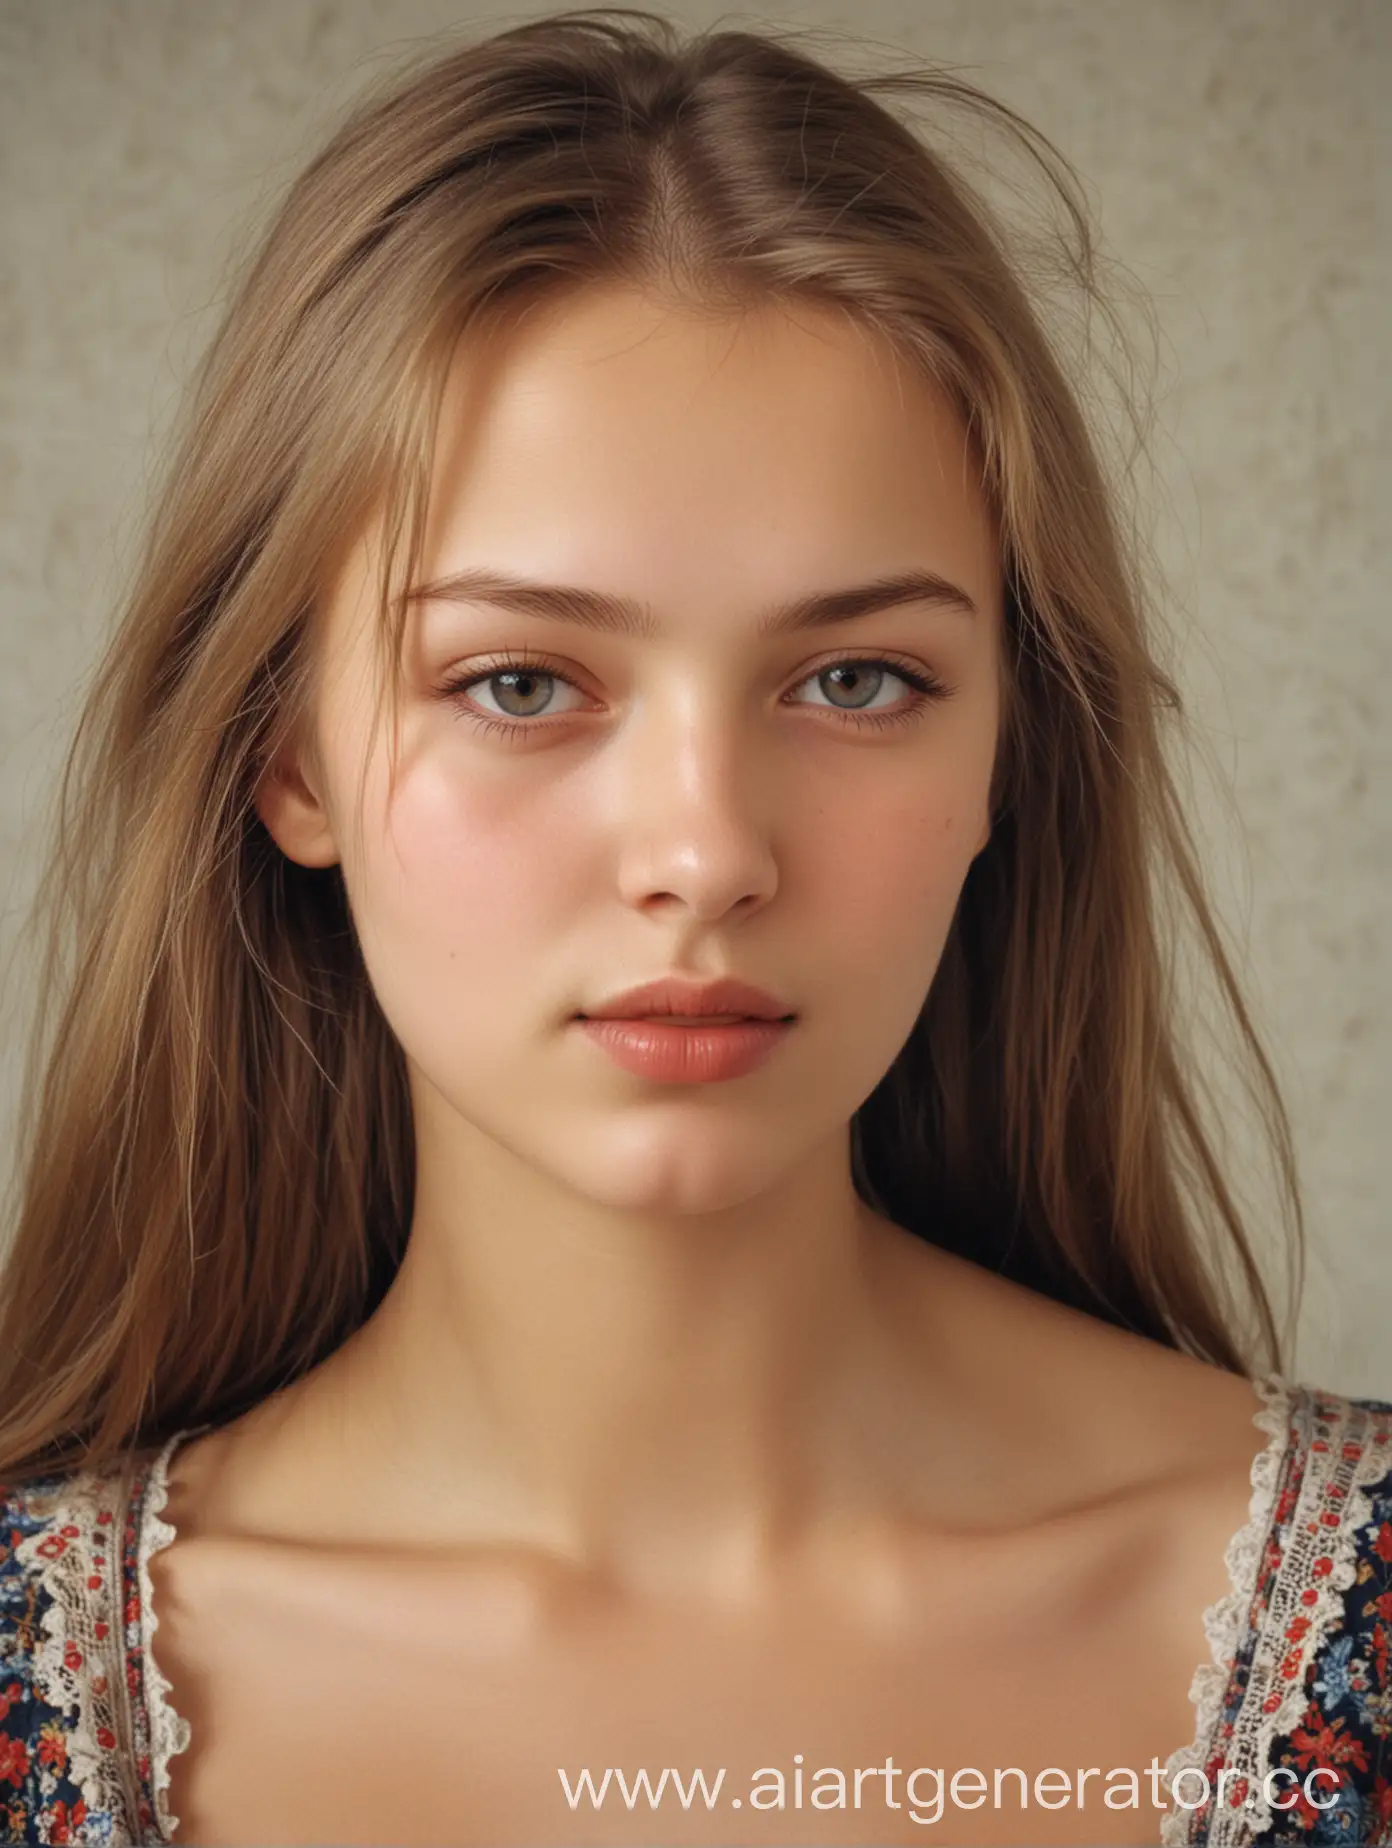 Beautiful-Russian-Girl-Nostalgic-90sEarly-2000s-Fashion-Portrait